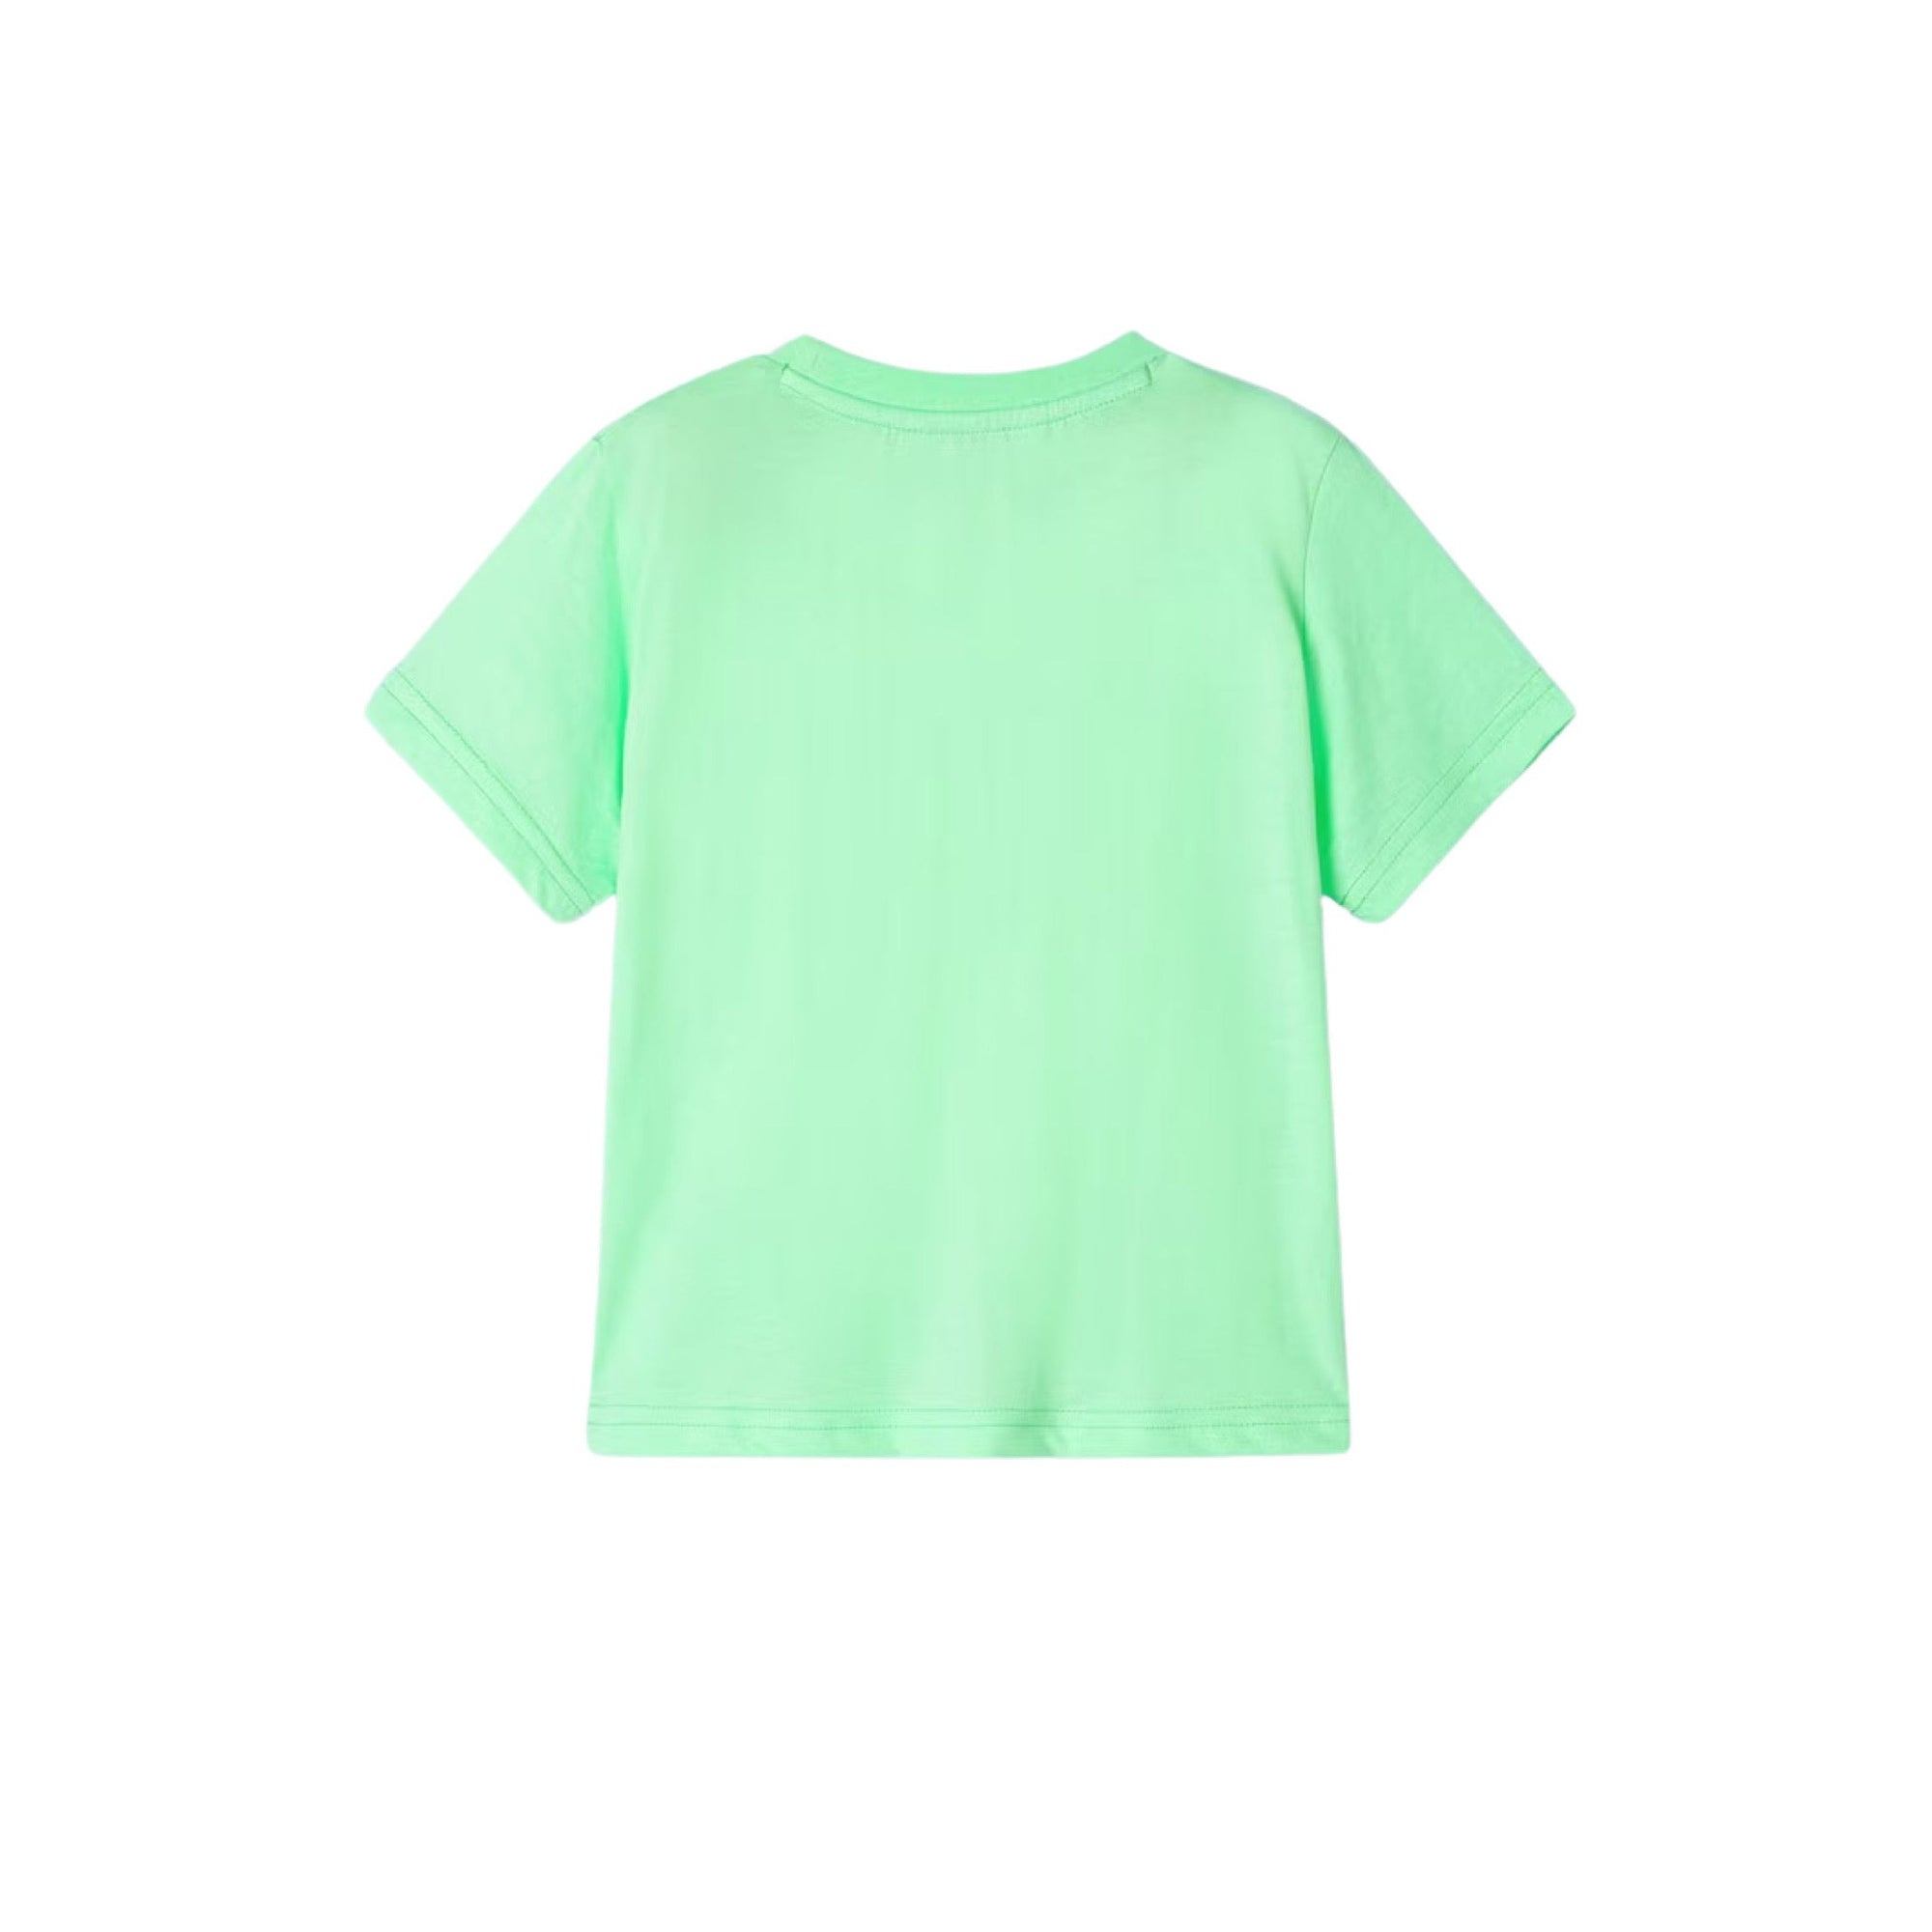 Lime Green “Easy Life” Print T-Shirt